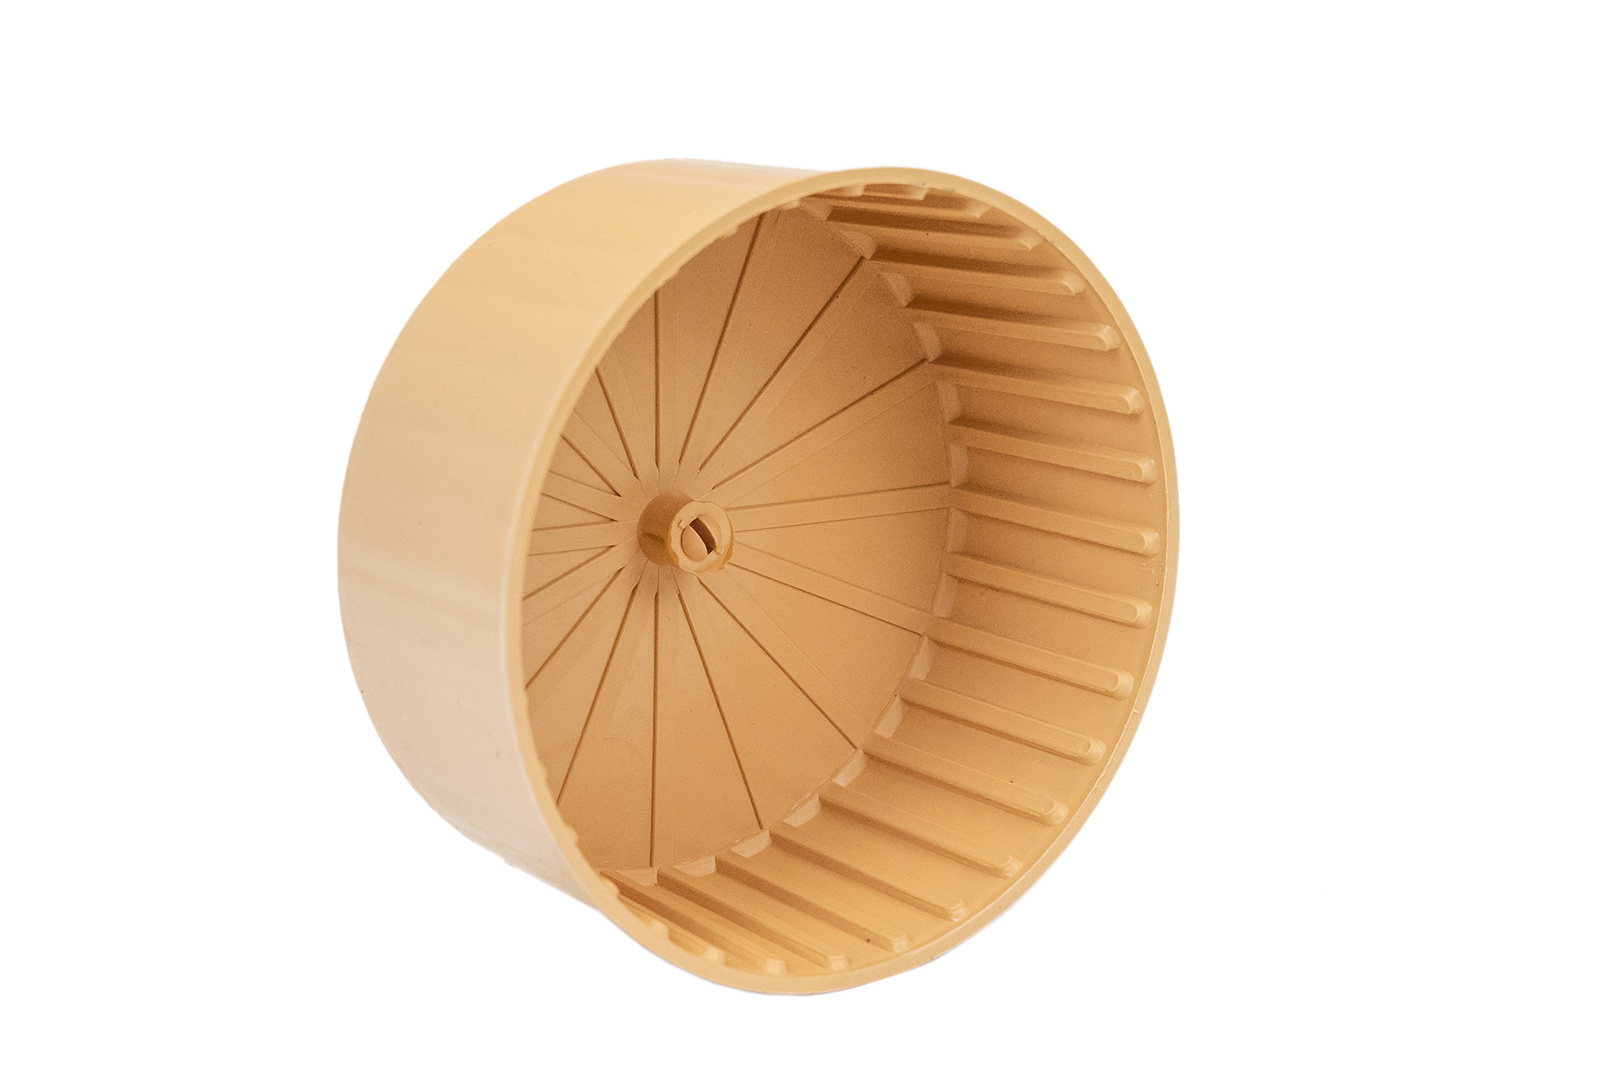 Yami-Yami Yami-Yami колесо для грызунов полузакрытое, без подставки (беж) колесо шар для грызунов savic пластик 12см